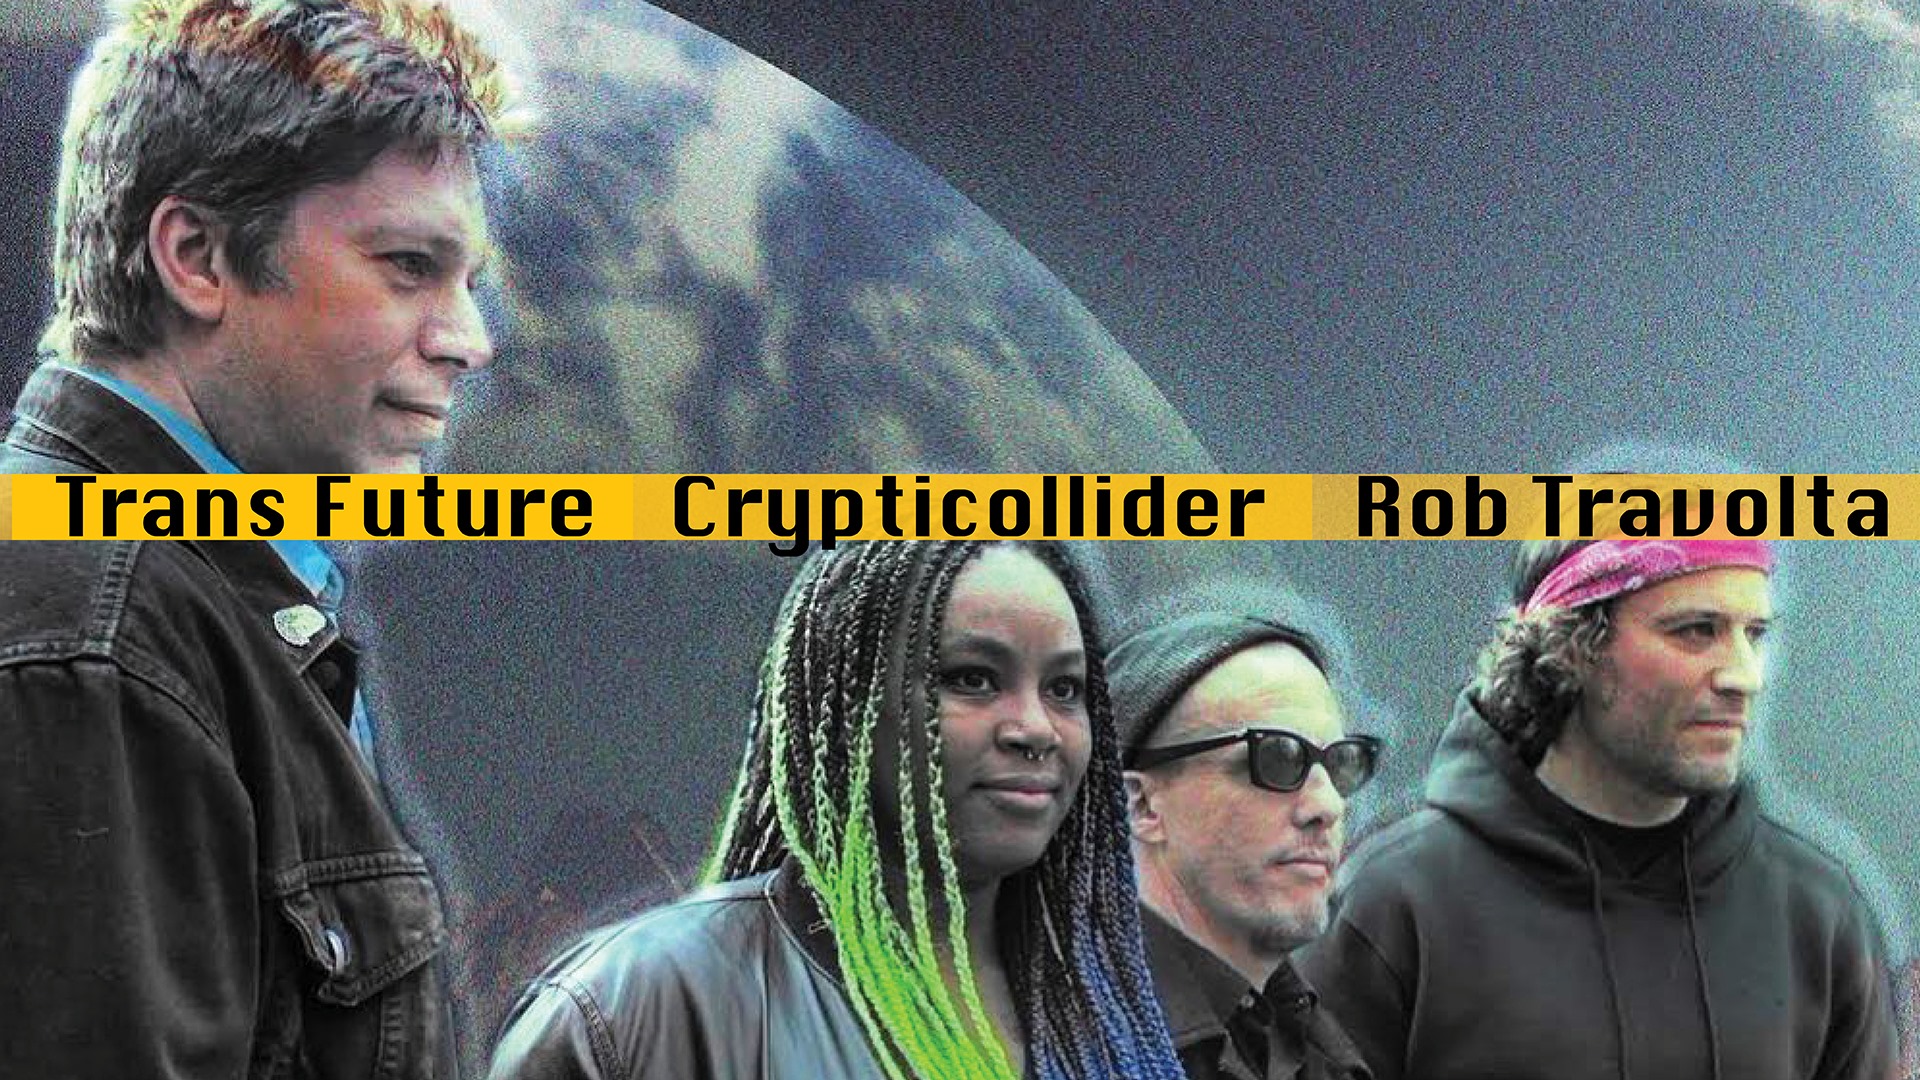 Trans Future / Crypticollider / Rob Travolta